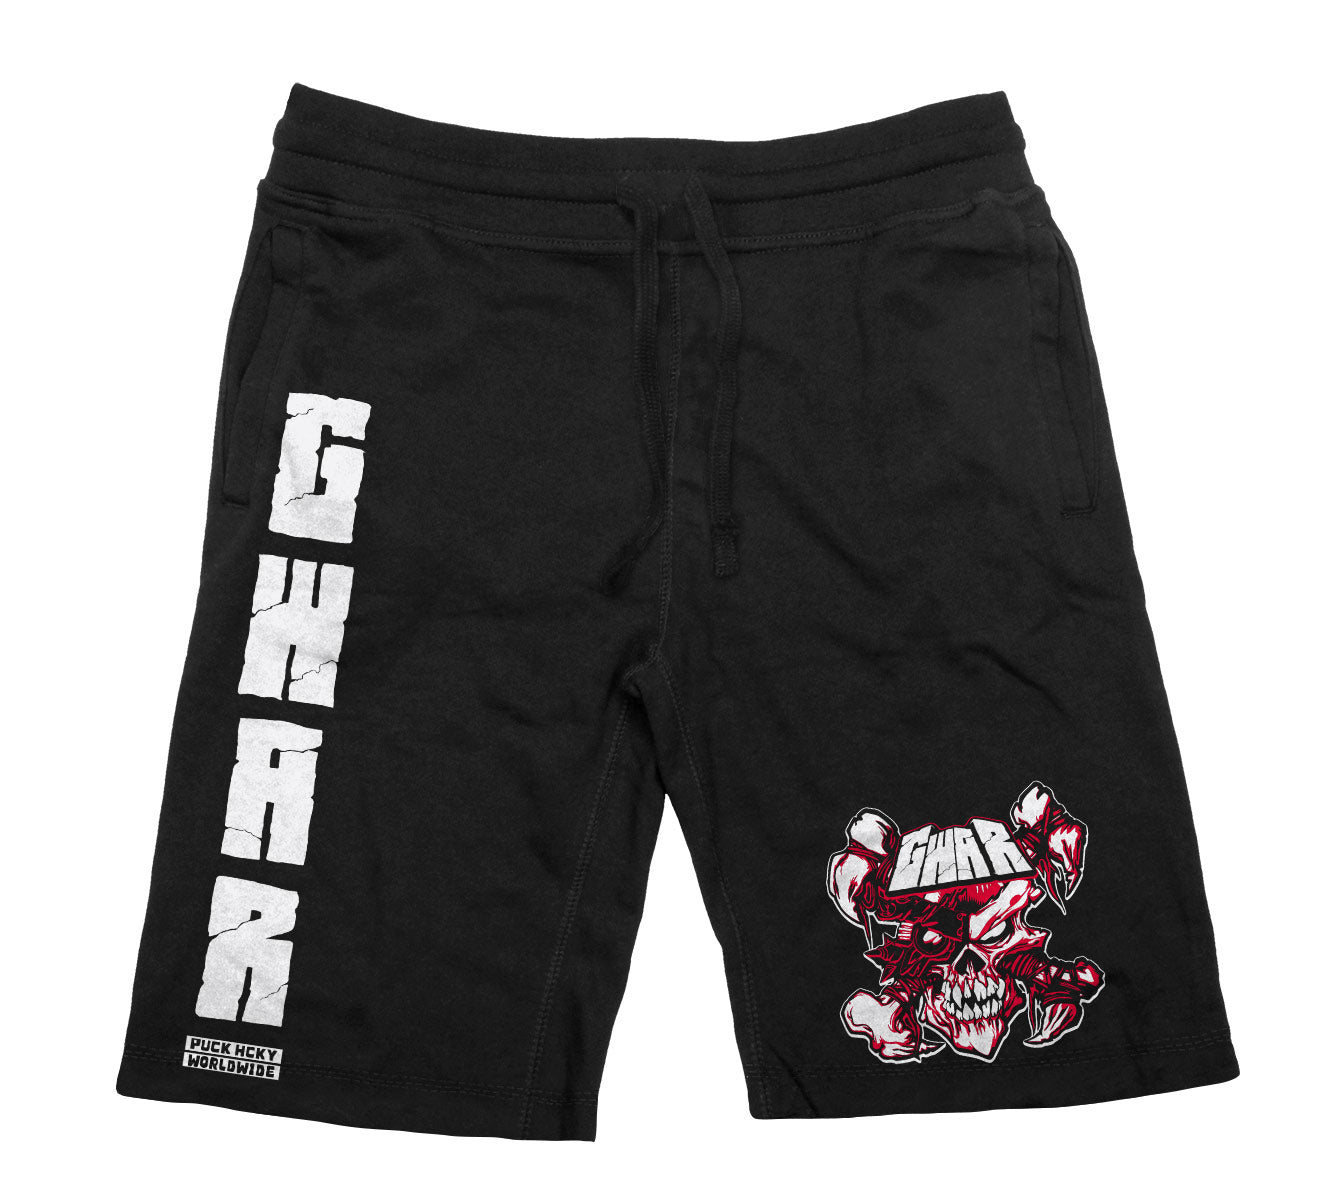 GWAR ‘CROSSBONES CROSSCHECK’ fleece hockey shorts in black